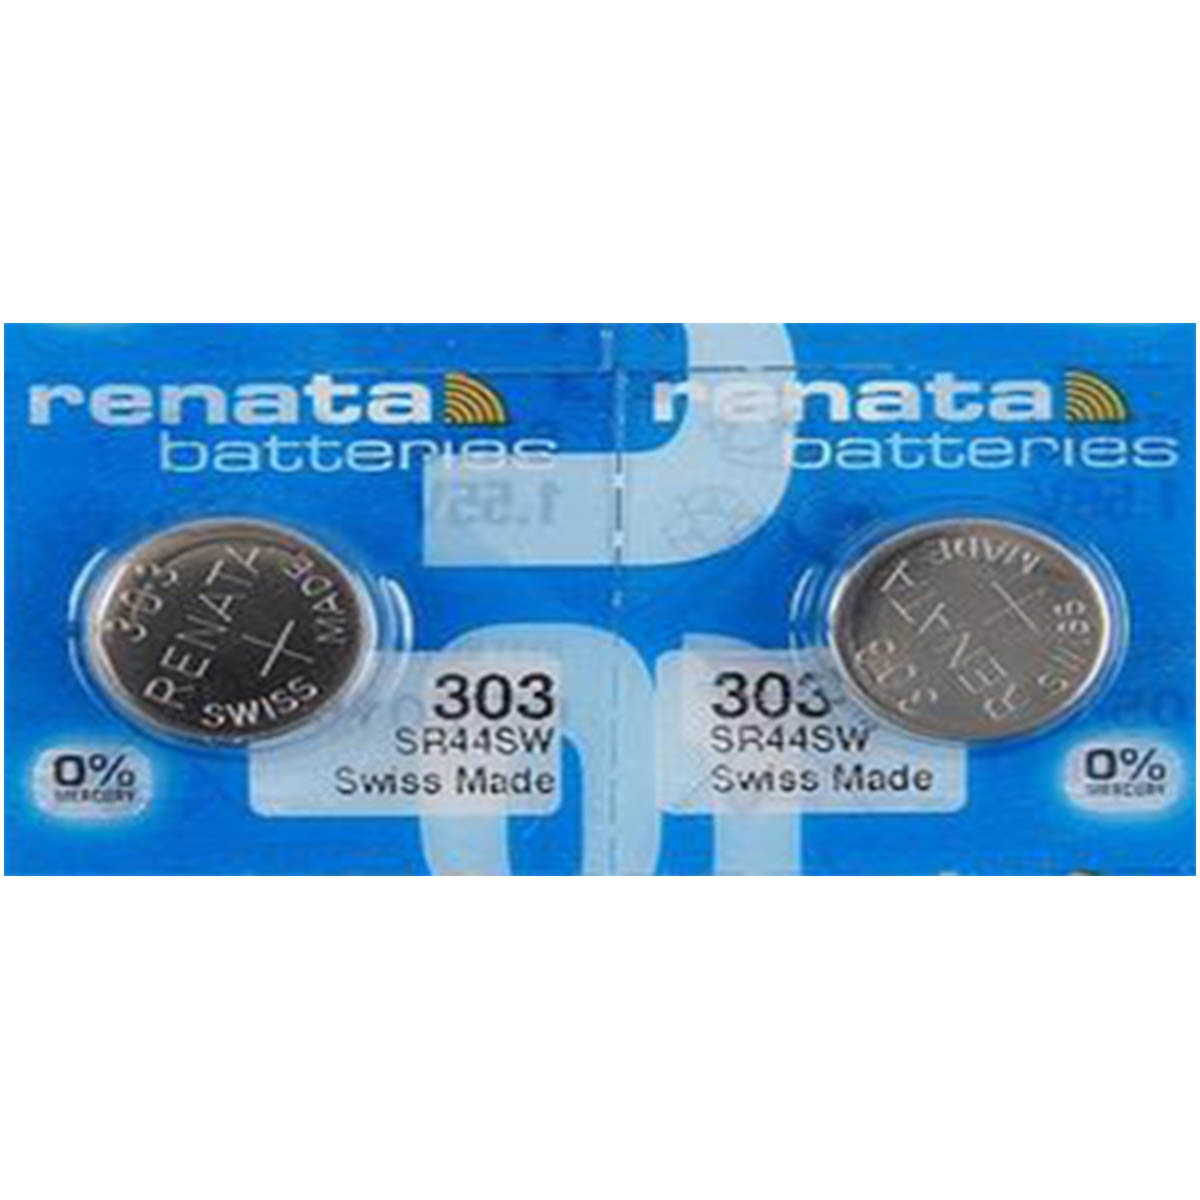 Renata 303 Battery (SR44W) Silver Oxide 1.55V (1PC)